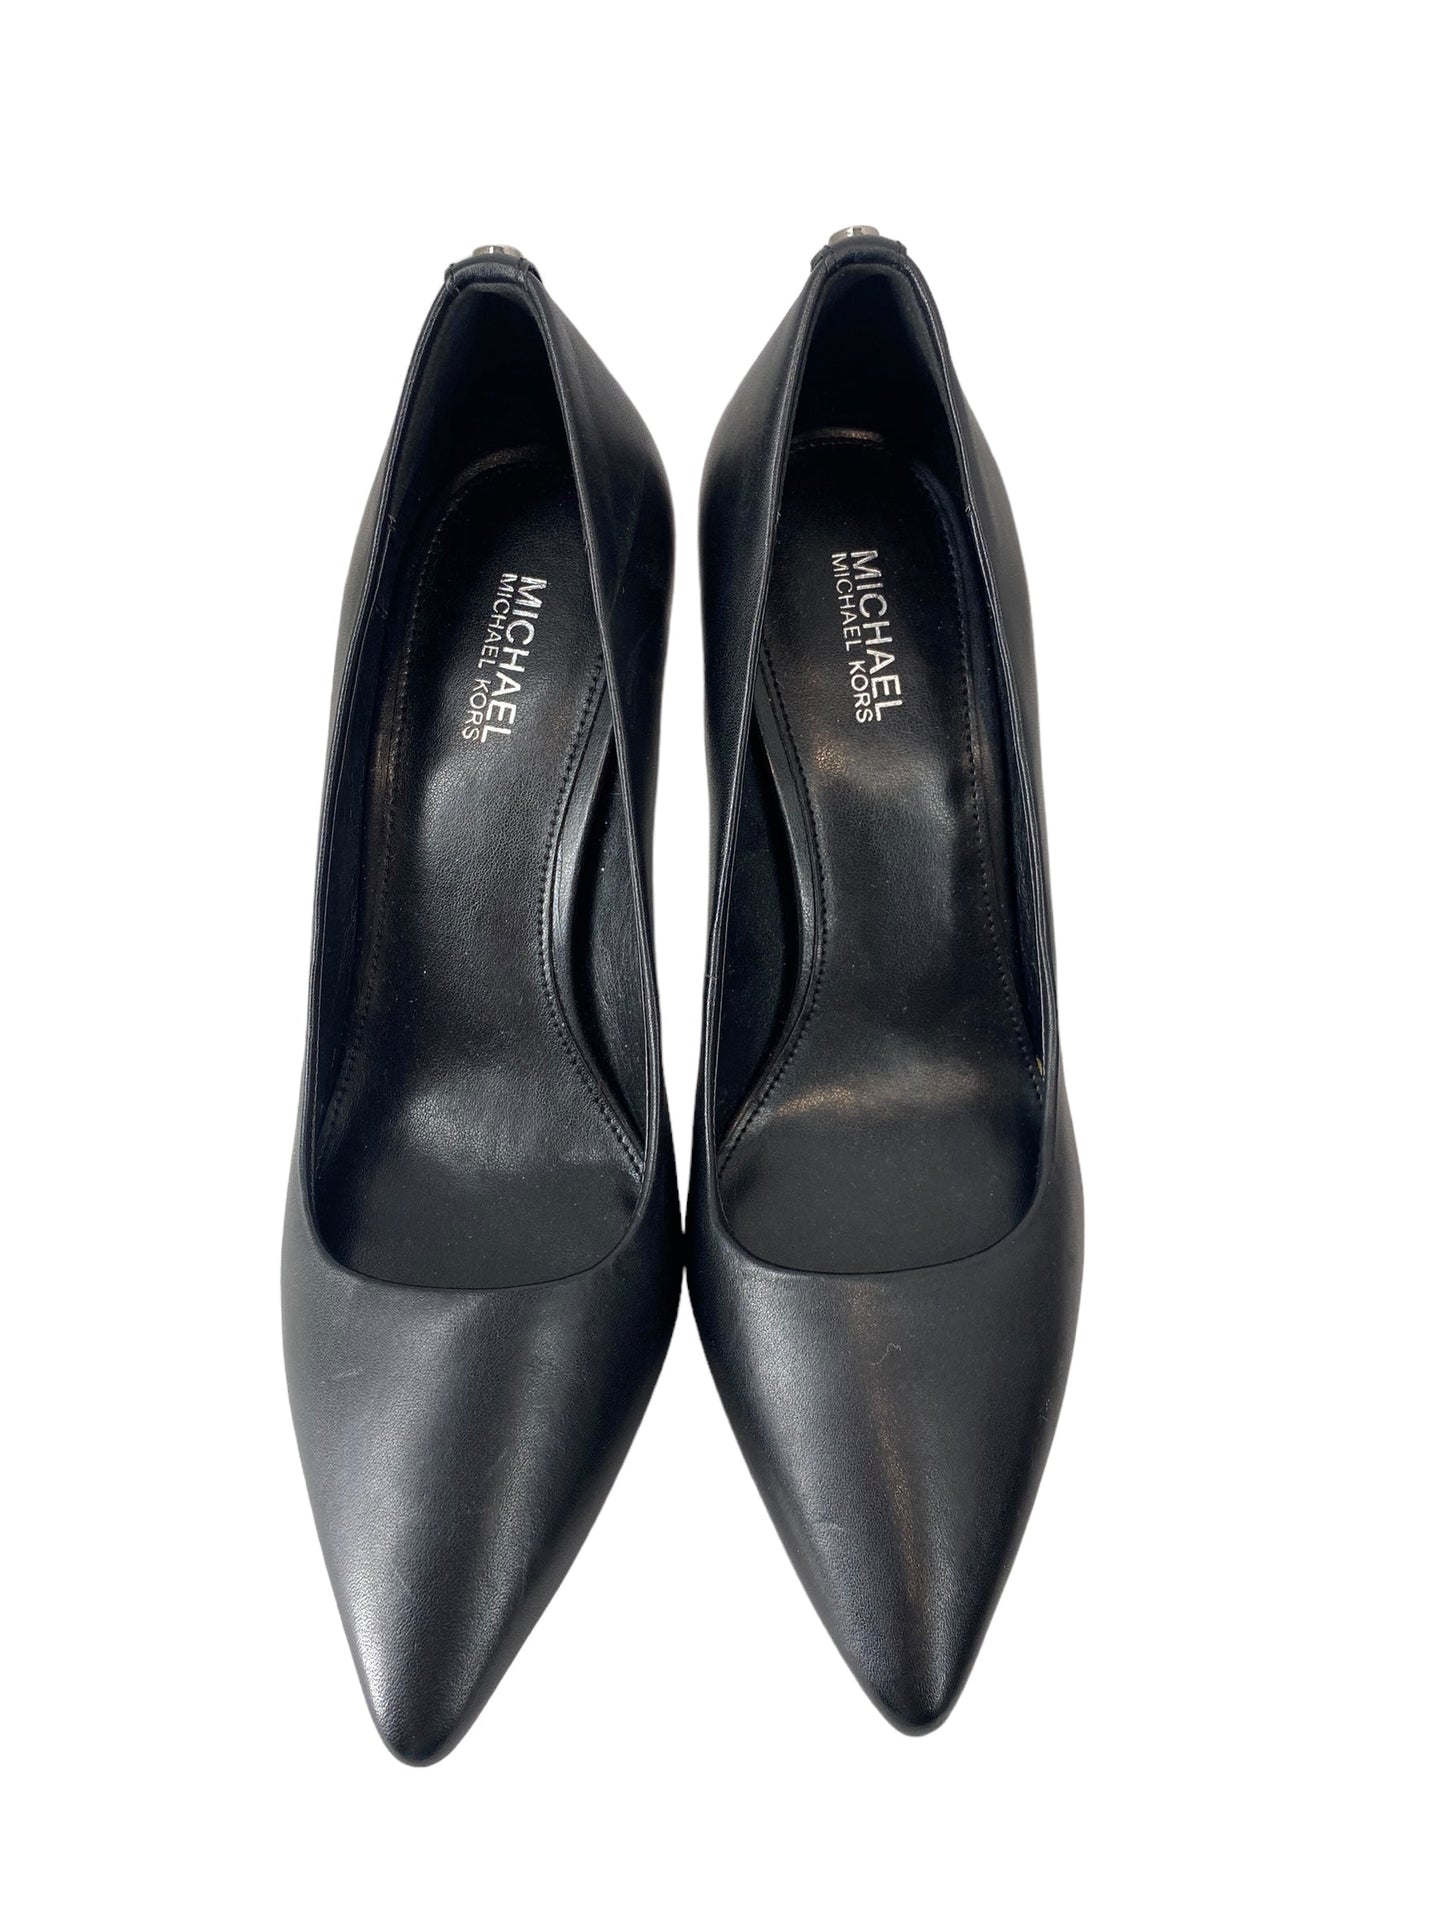 Black Shoes Heels Stiletto Michael By Michael Kors, Size 6